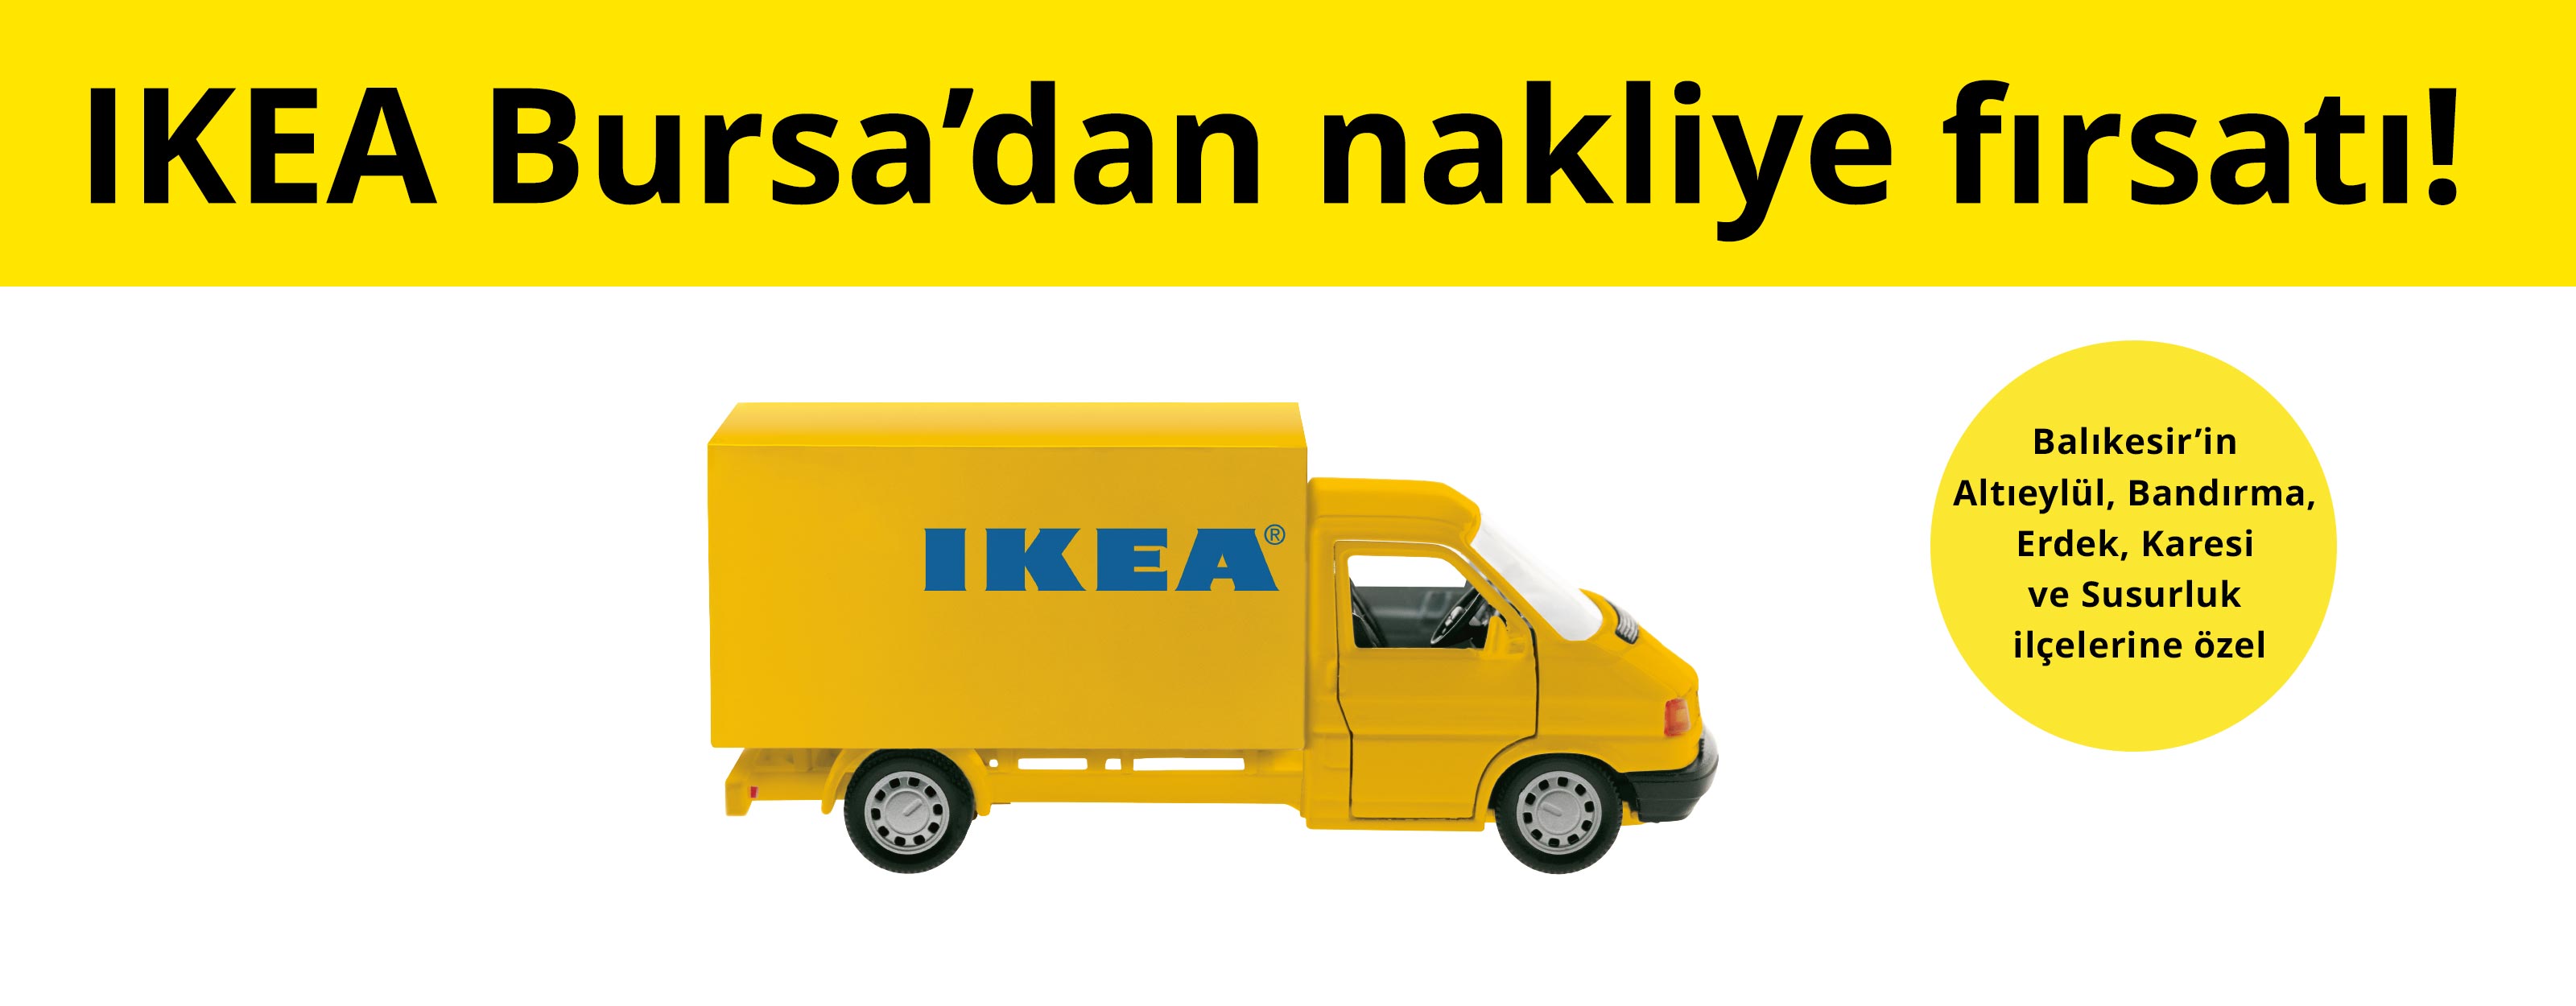 IKEA-ikea bursa balikesir nakliye kampanyasi agustos detay tr